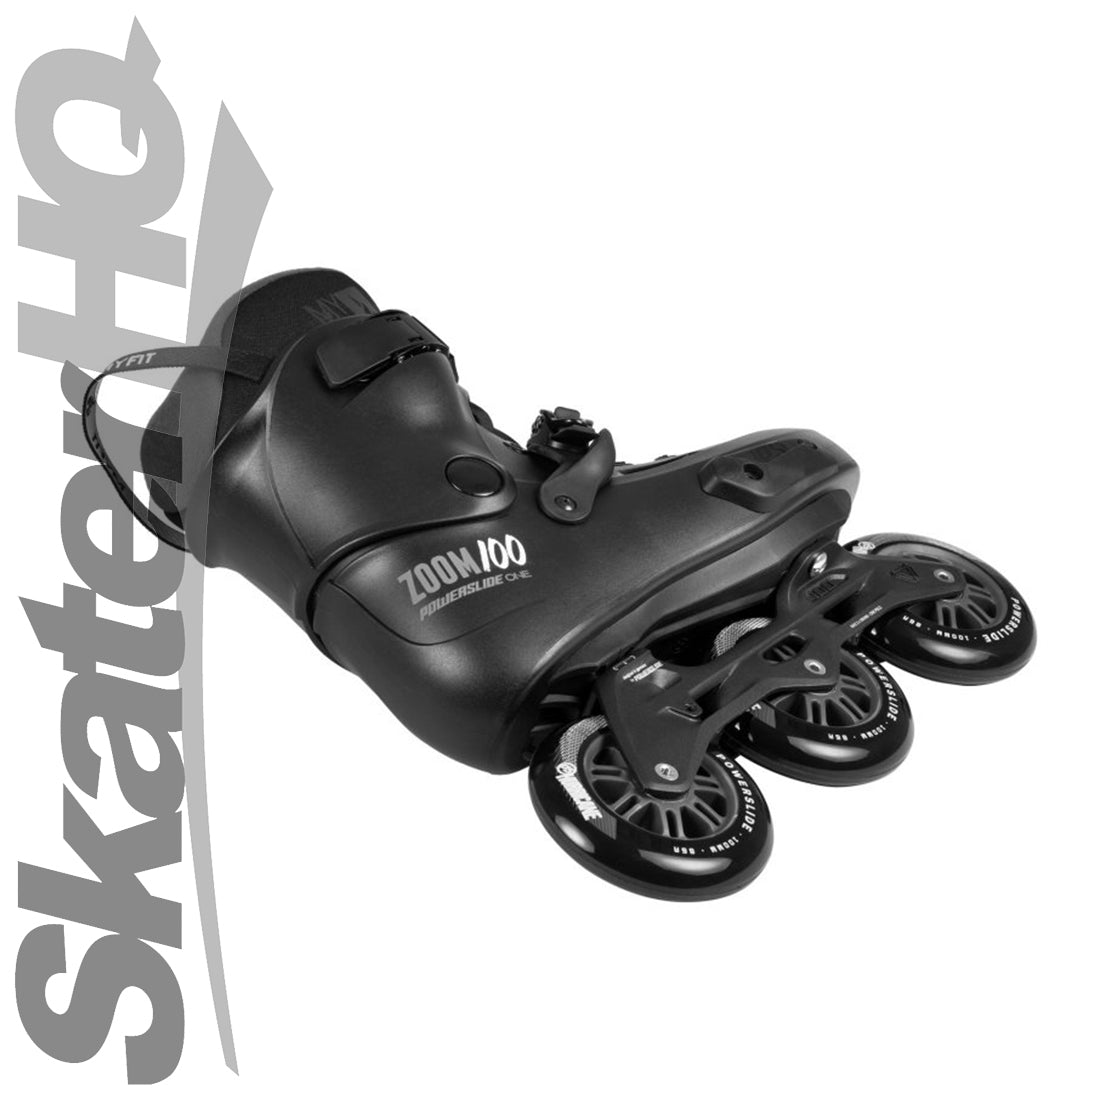 Powerslide Zoom Pro 100 EU43-44 10-10.5US Inline Rec Skates